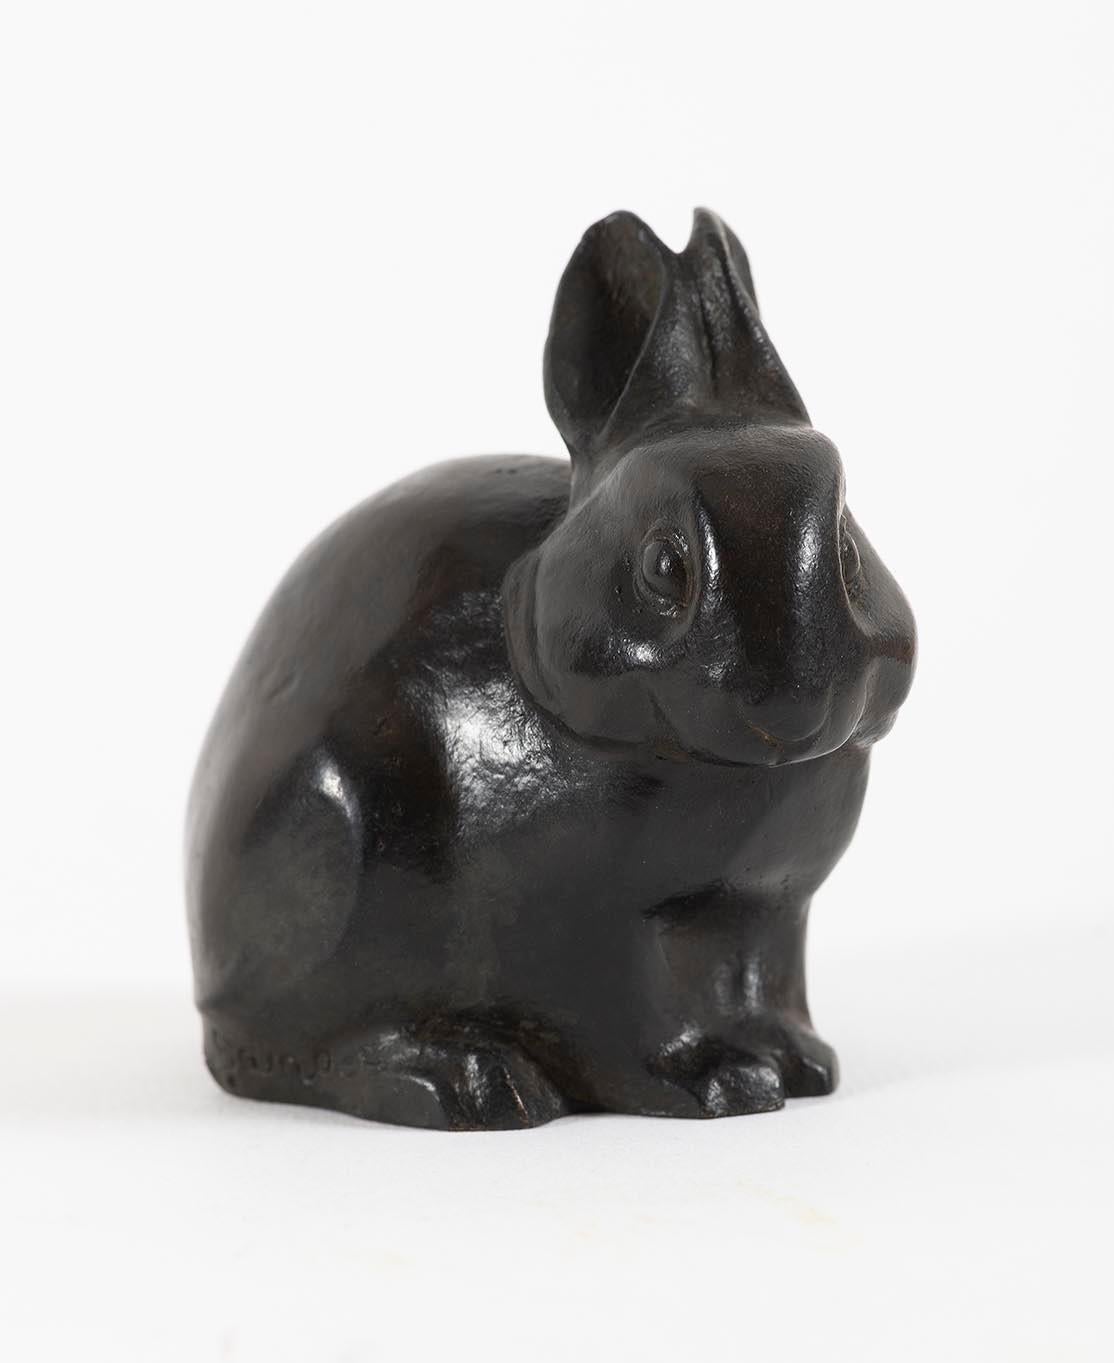 Lapin, by Sandoz, rabbit, animal, sculpture, bronze, 1910's, swiss artist, cast - Art by Edouard-Marcel Sandoz